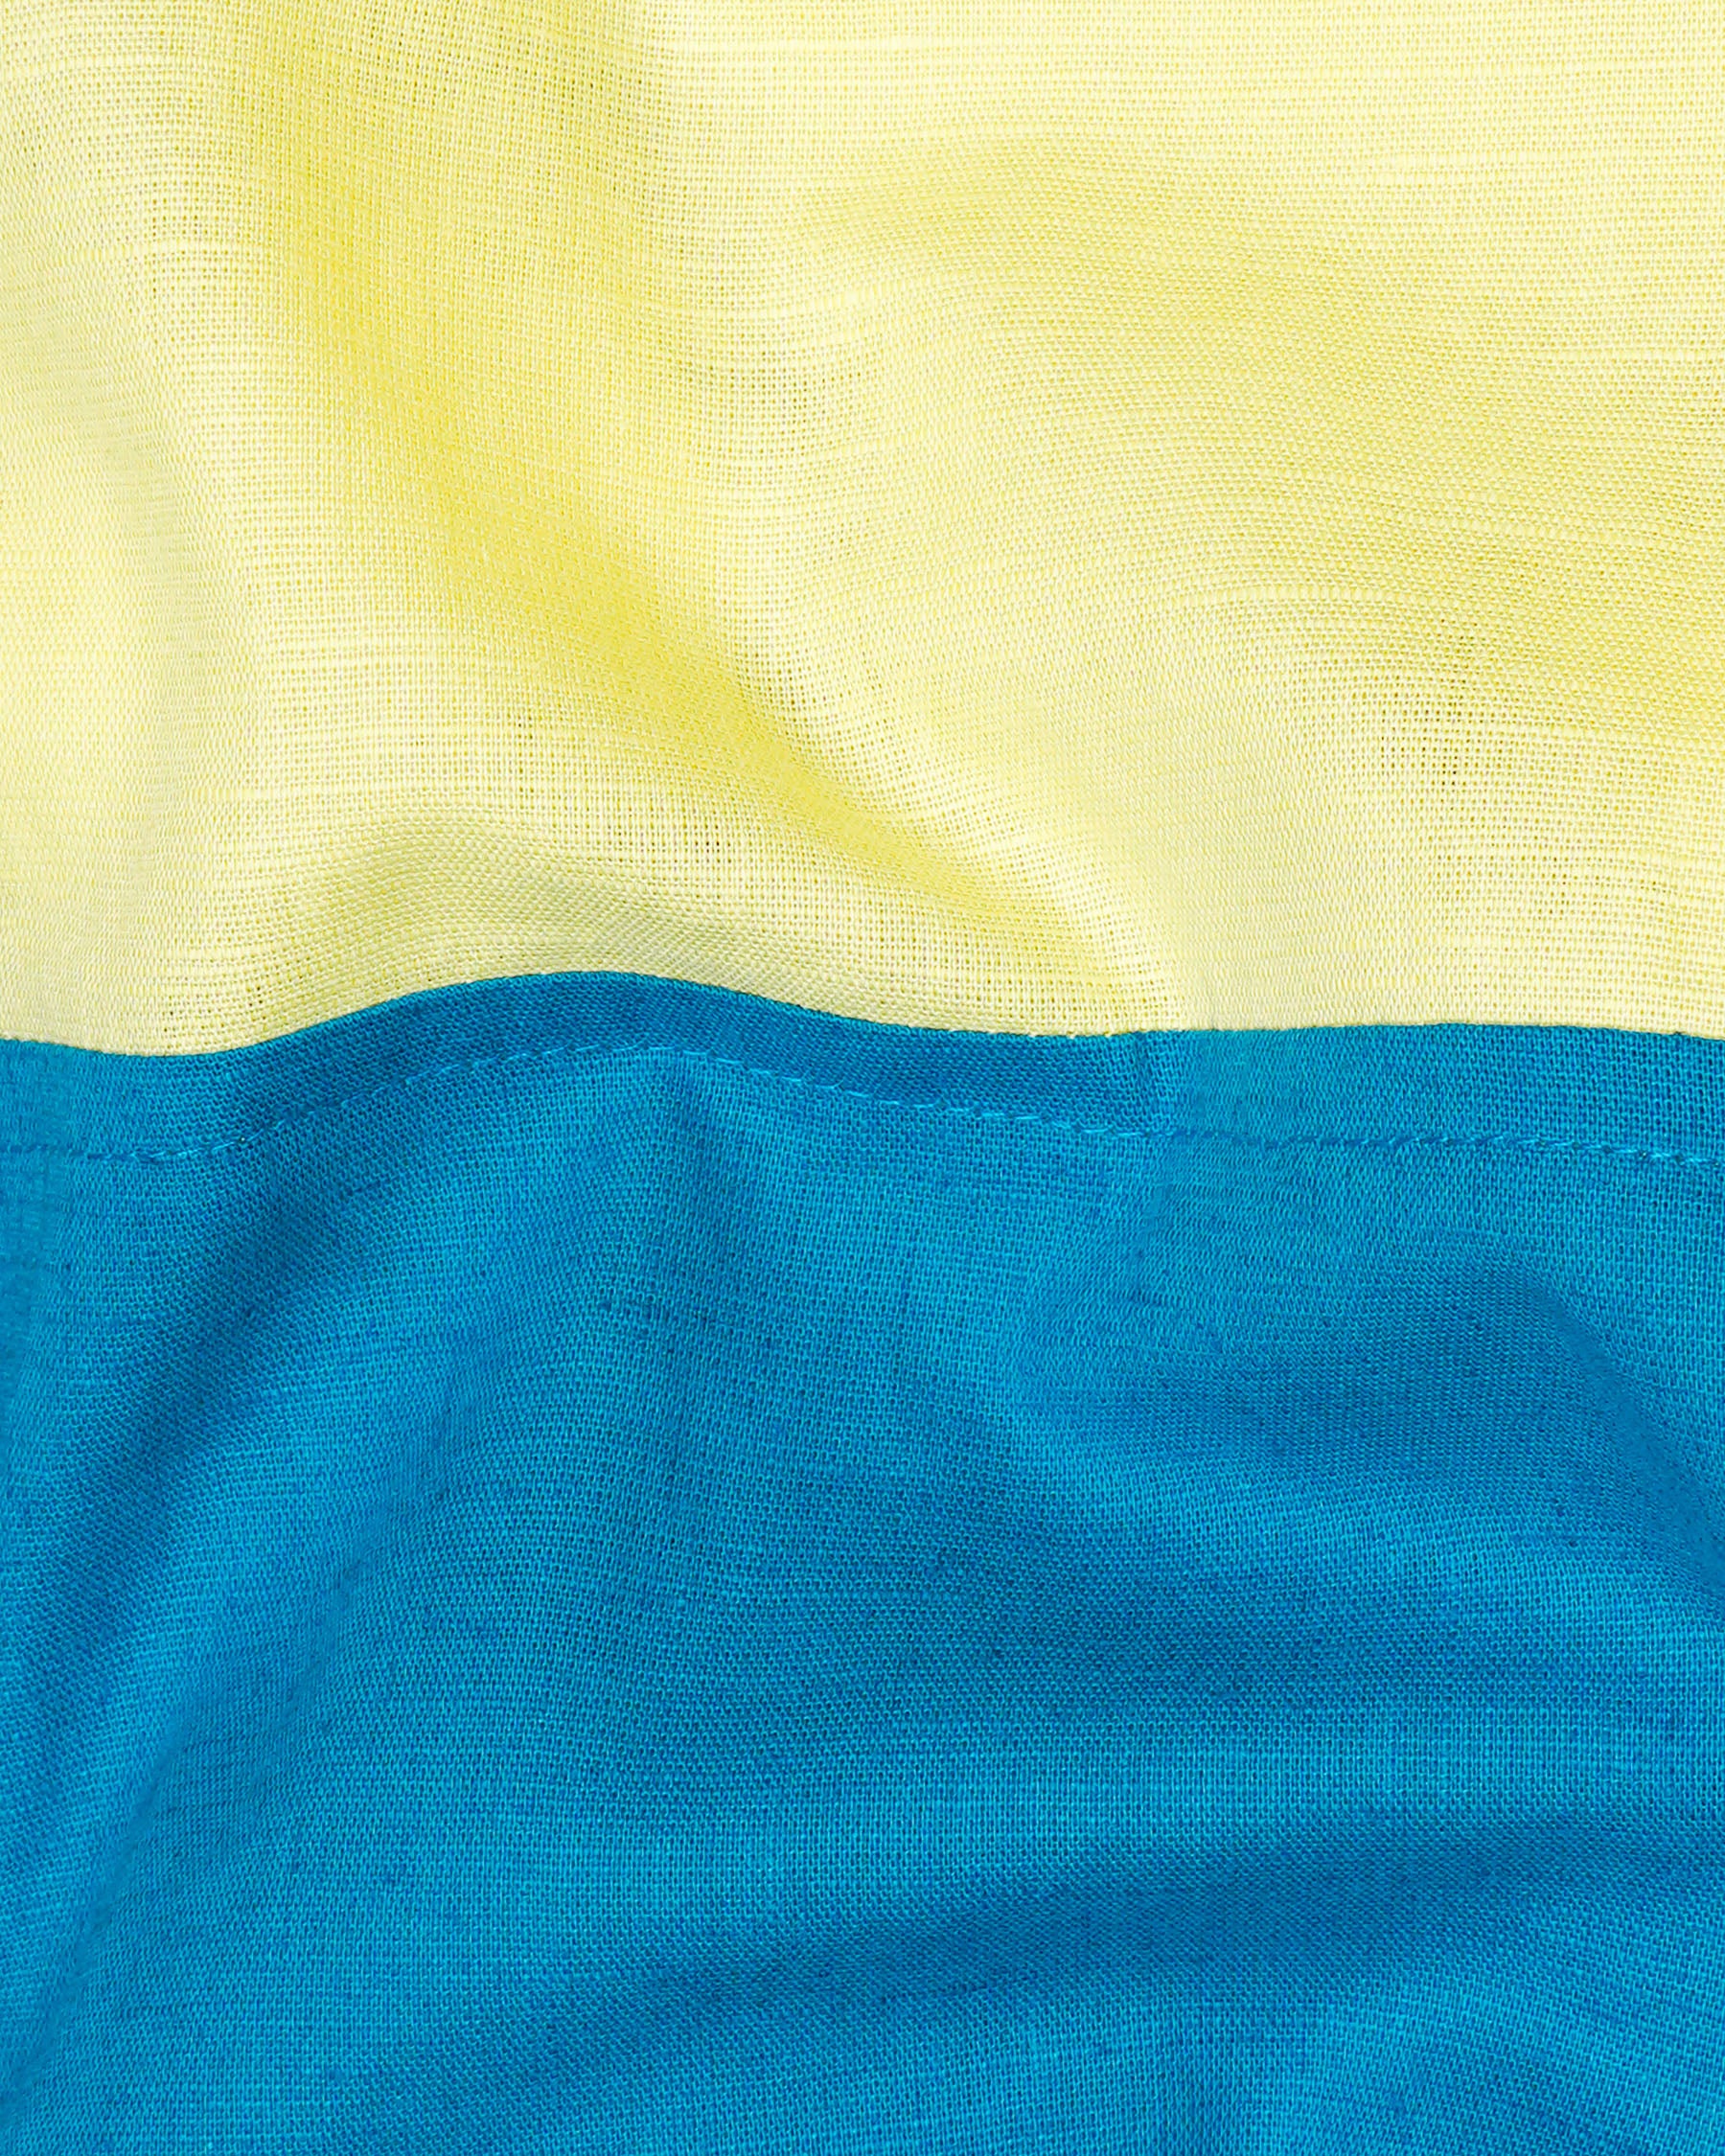 Blond Yellow with Bondi Blue Luxurious Linen Designer Shirt 7752-P117-38, 7752-P117-H-38, 7752-P117-39,7752-P117-H-39, 7752-P117-40, 7752-P117-H-40, 7752-P117-42, 7752-P117-H-42, 7752-P117-44, 7752-P117-H-44, 7752-P117-46, 7752-P117-H-46, 7752-P117-48, 7752-P117-H-48, 7752-P117-50, 7752-P117-H-50, 7752-P117-52, 7752-P117-H-52